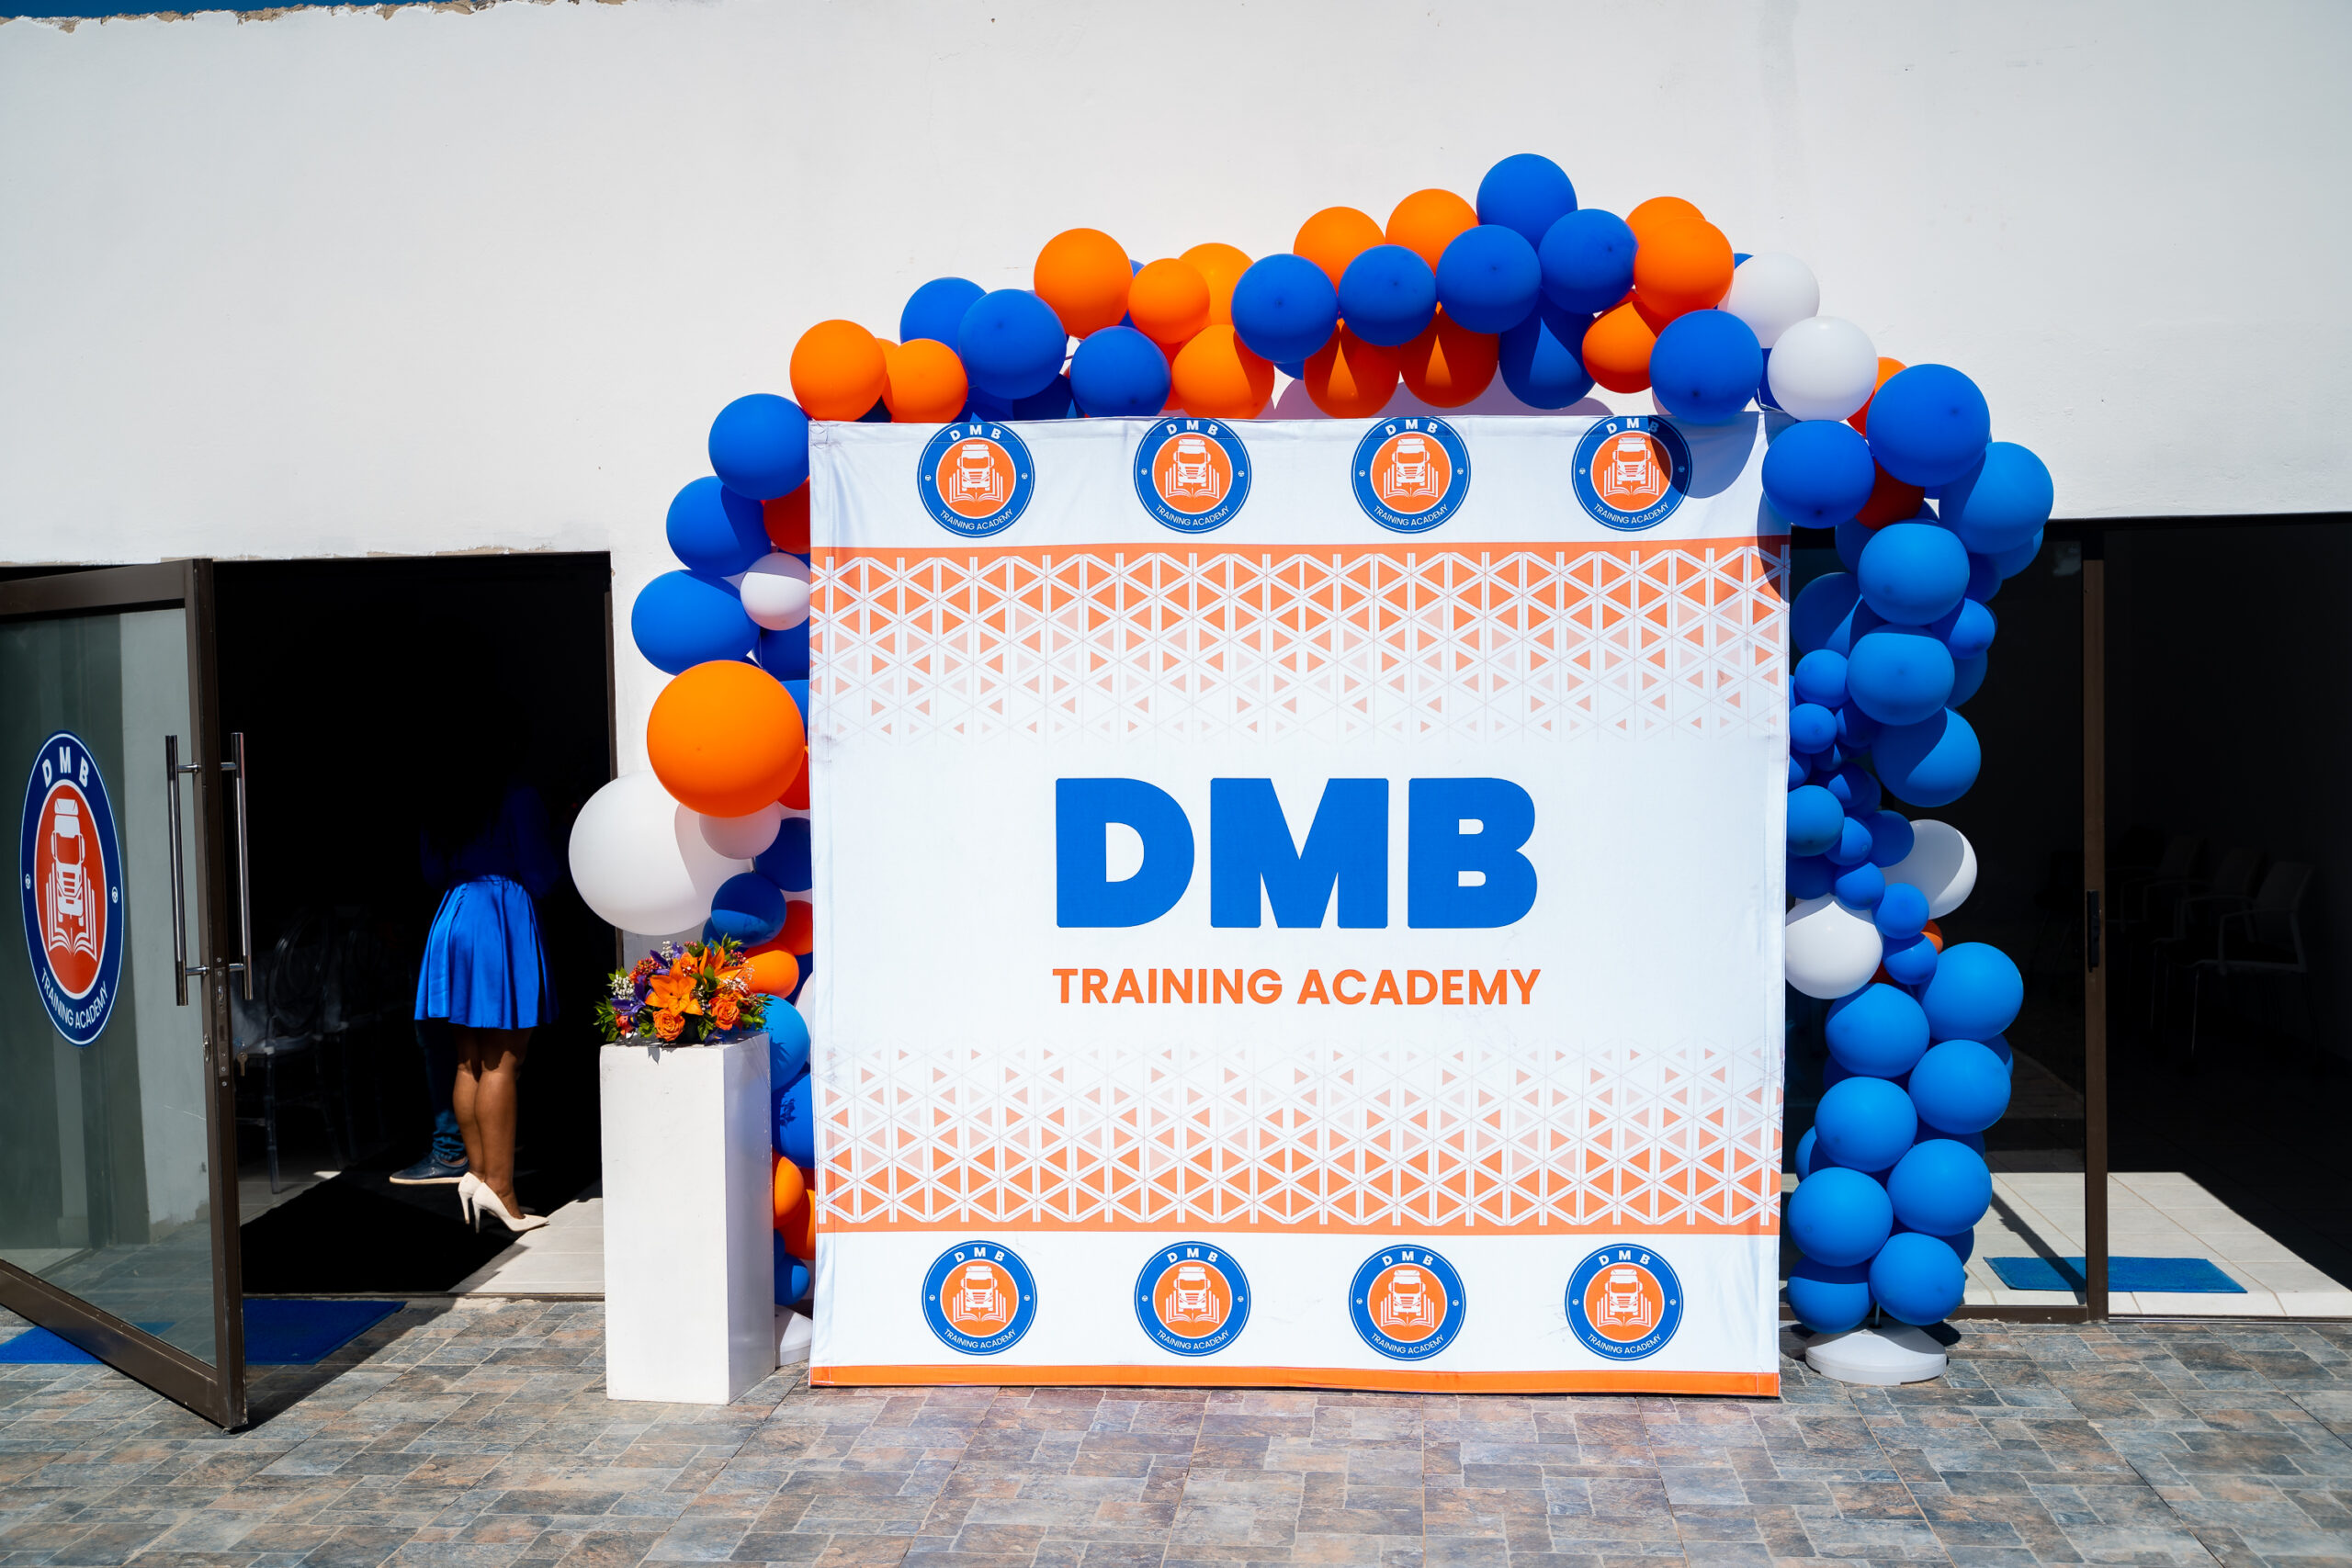 DMB Training Academy office